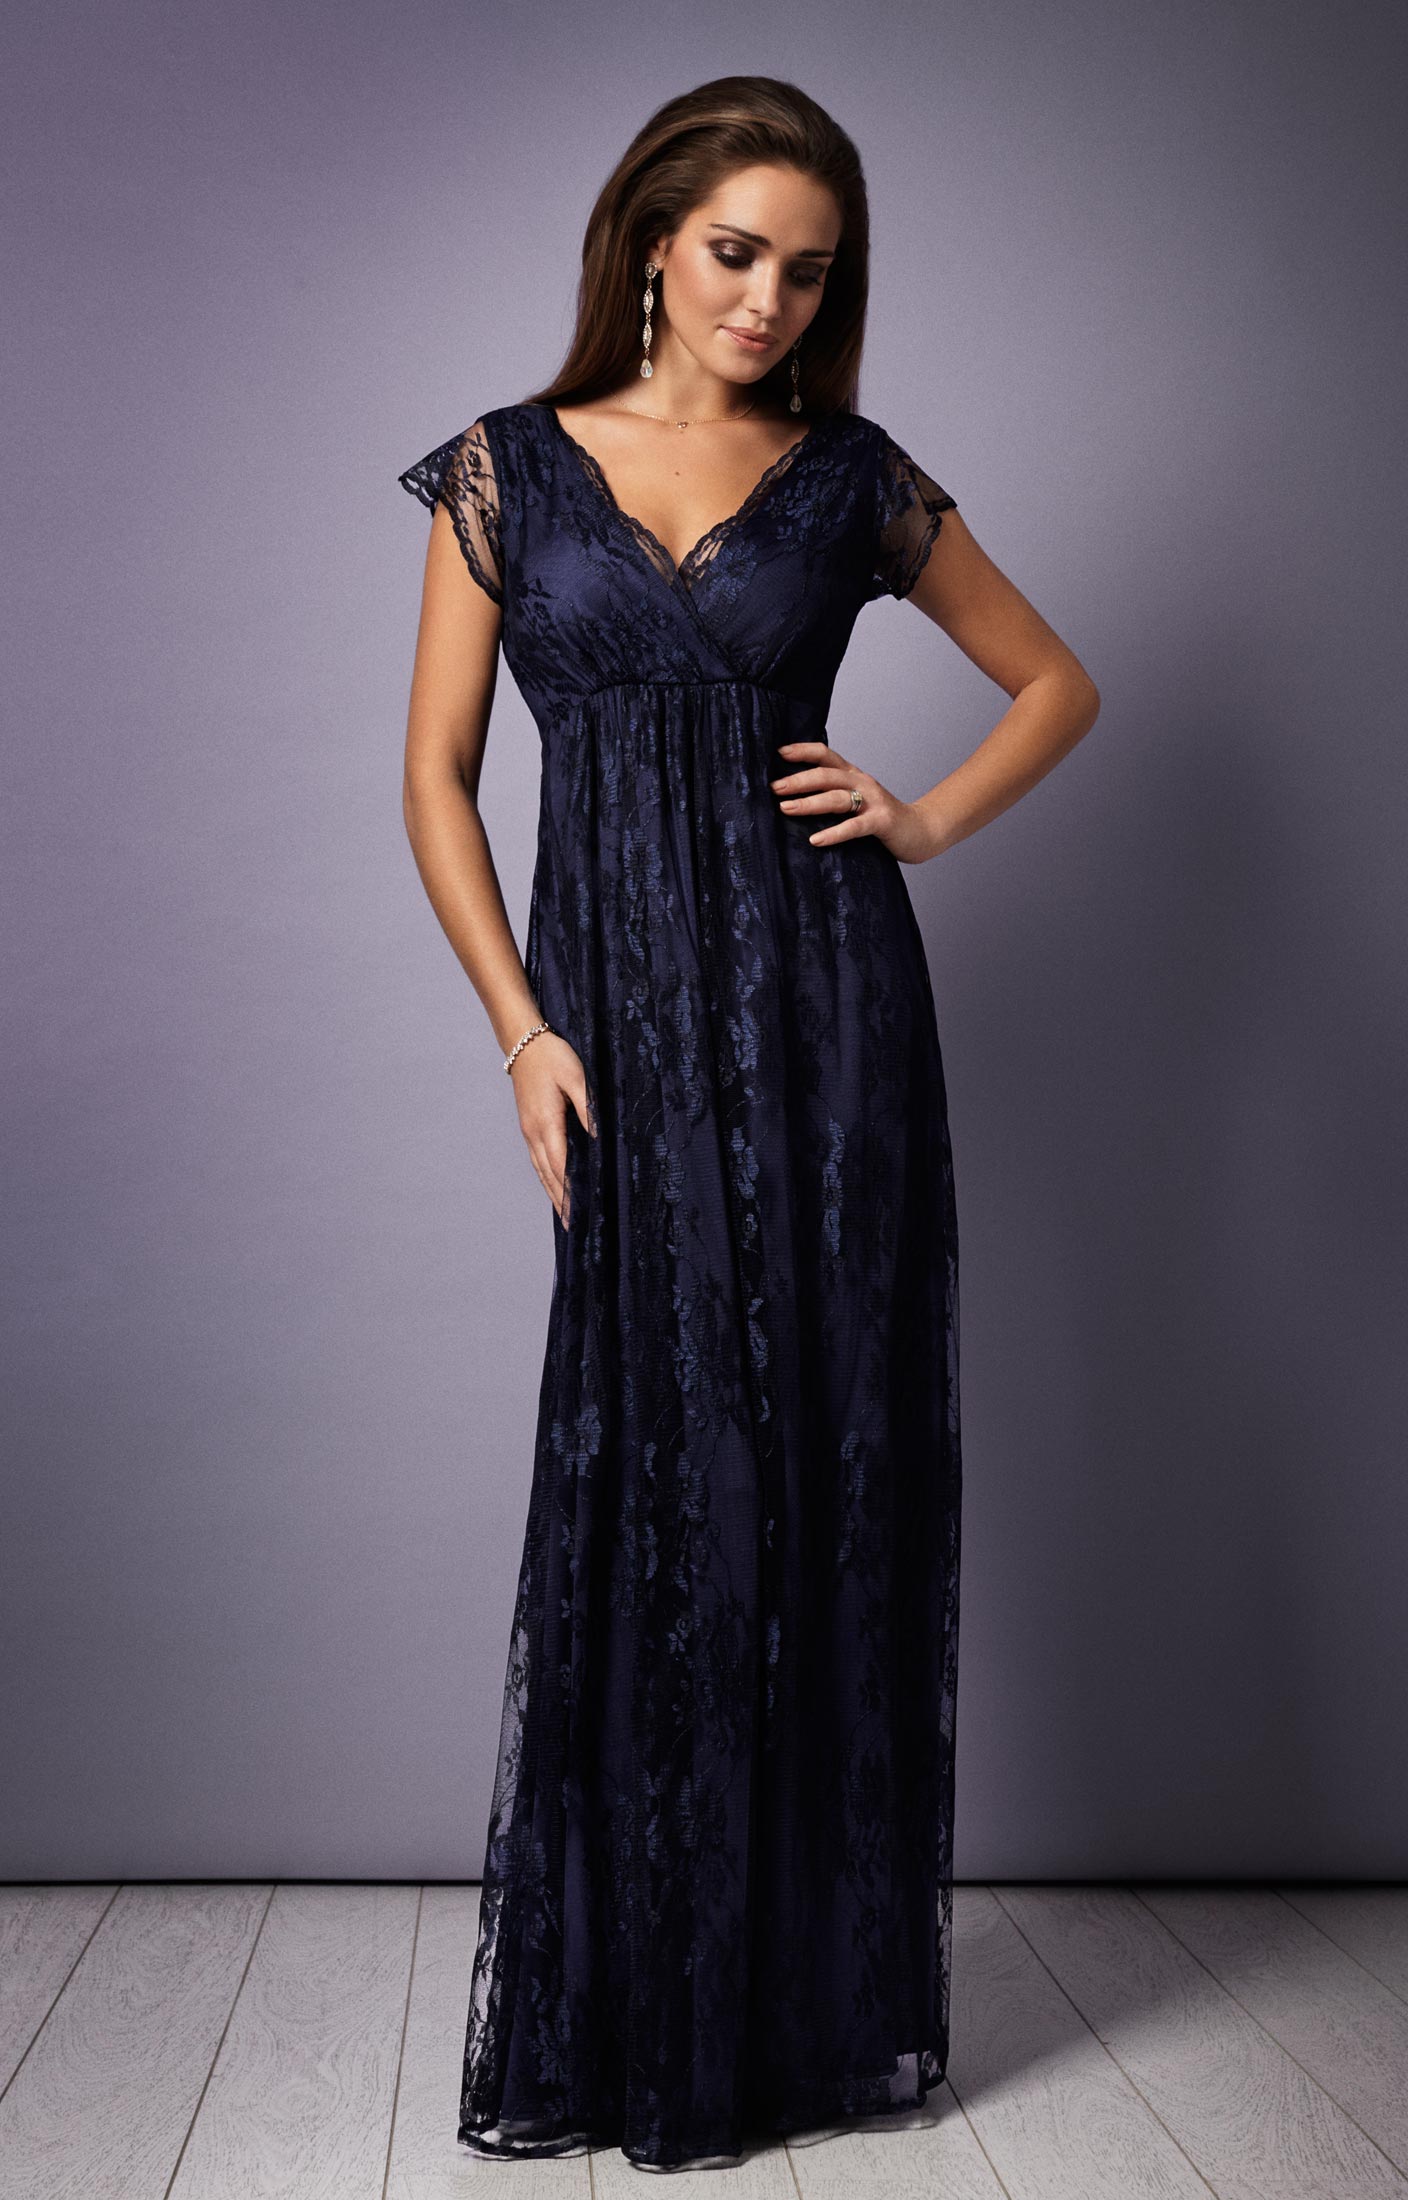 Tiffany Rose Maternity Formal Gown Eden Arabian Nights Navy Blue Lace Size  12-14 | eBay